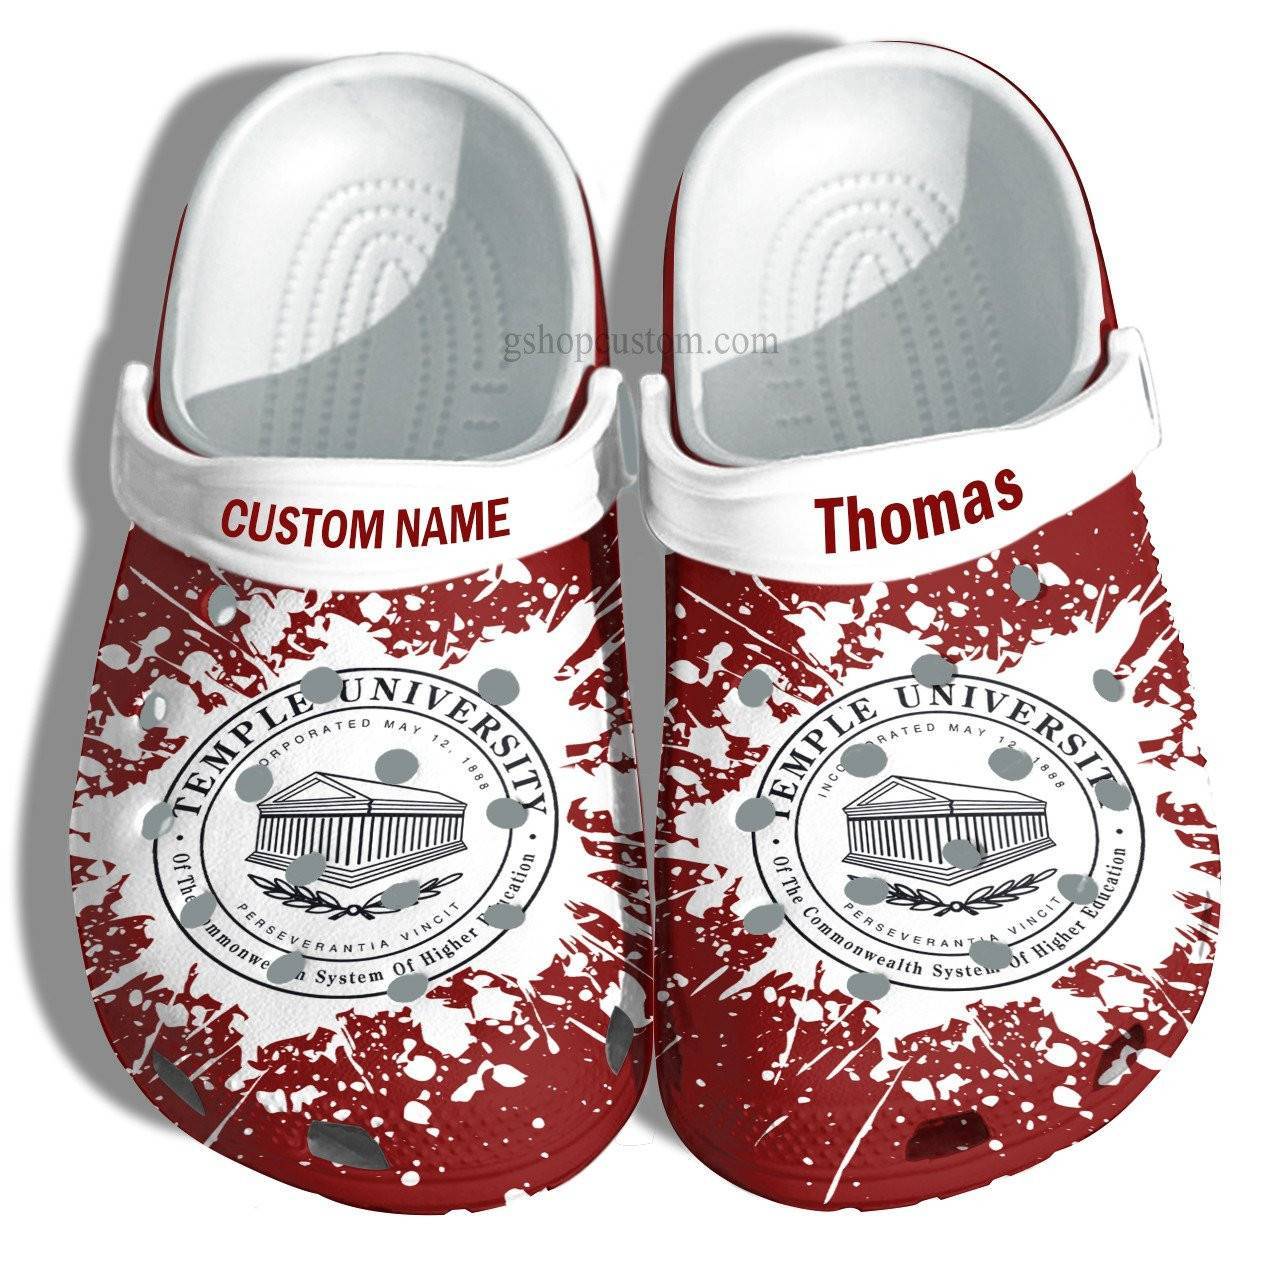 Temple University Graduation Gifts Croc Shoes Customize – Admission Gift Crocss Shoes